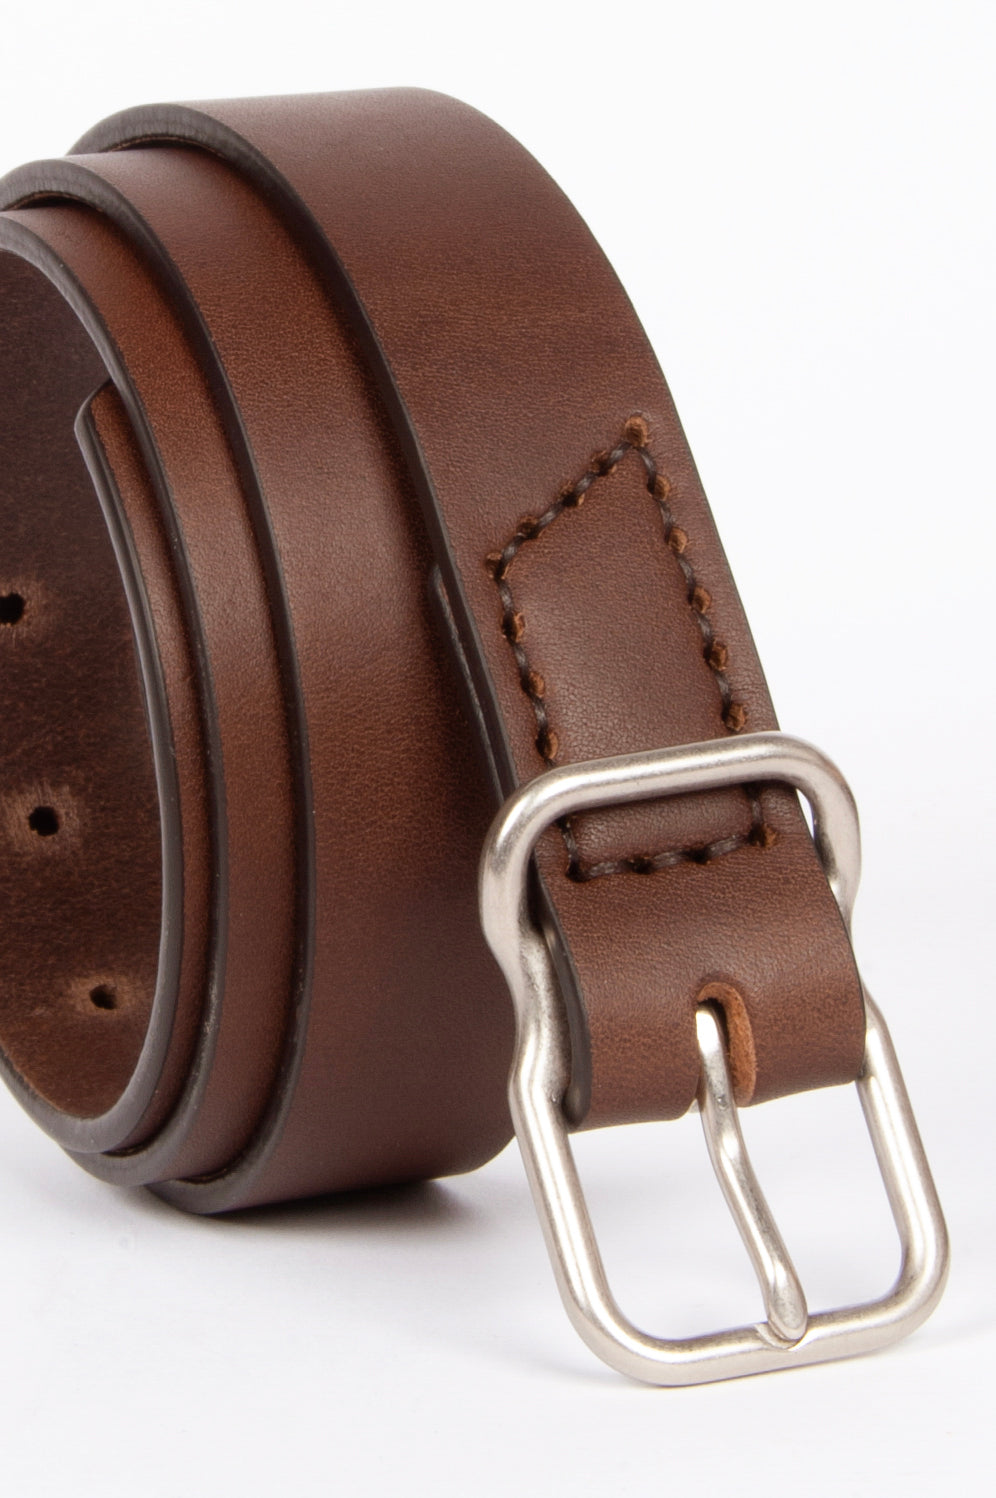 118 Signature Leather Belt - Narrow - Walnut - Nickel